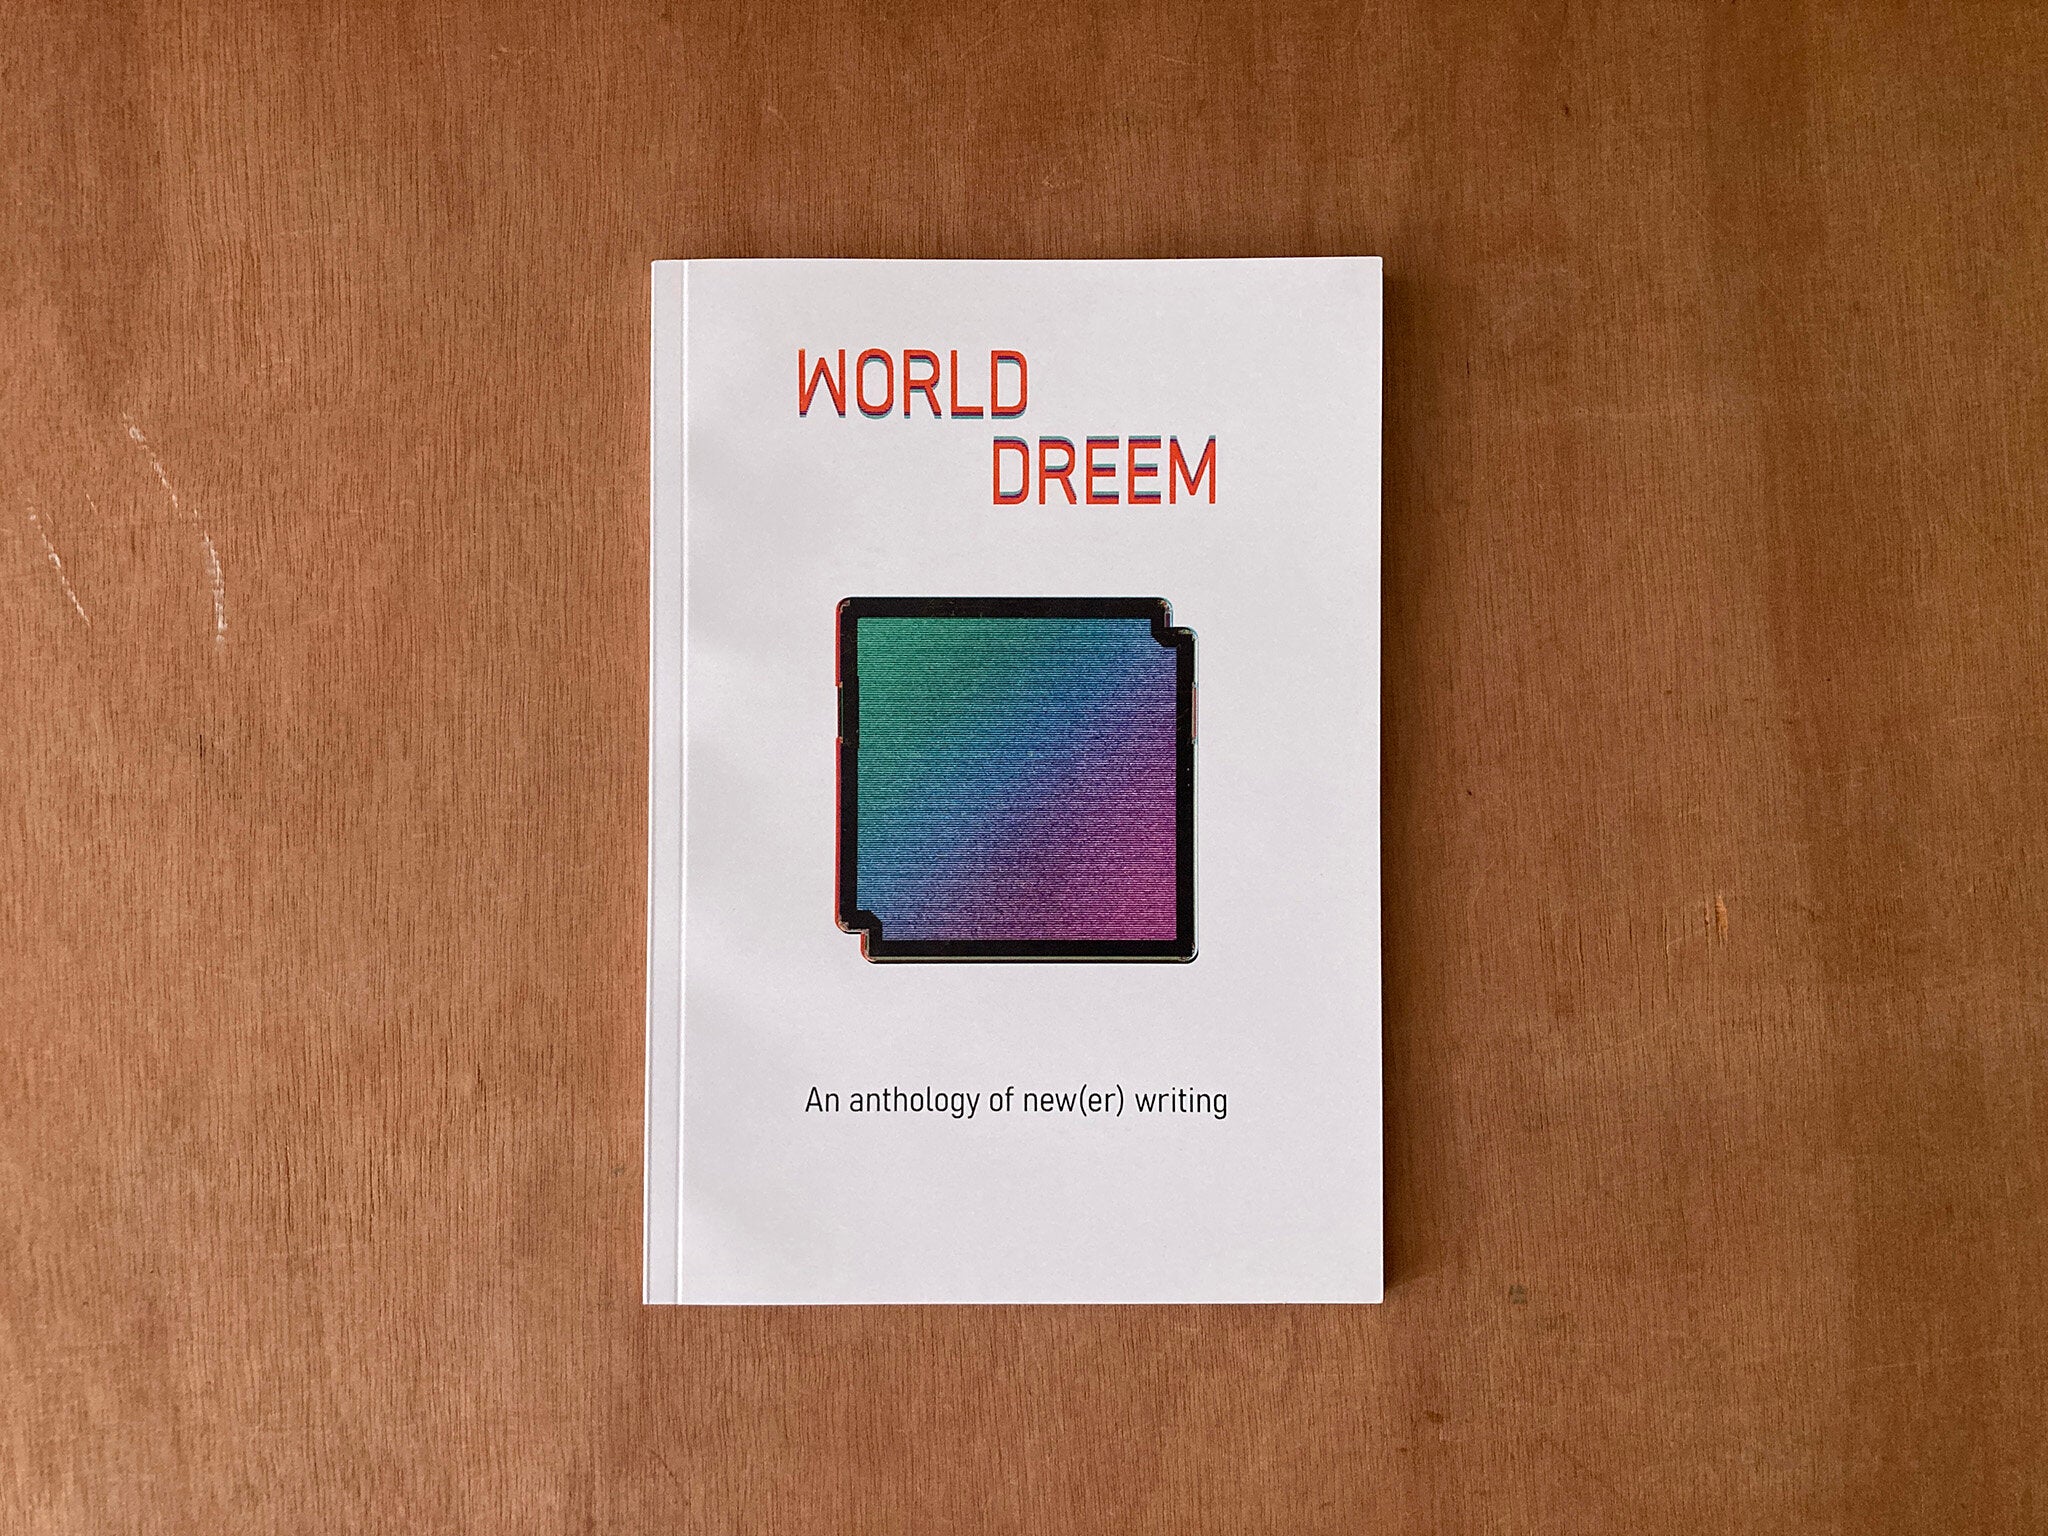 WORLD-DREEM: AN ANTHOLOGY OF NEW(ER) WRITING edited by Tom Byam Shaw and Ian Macartney